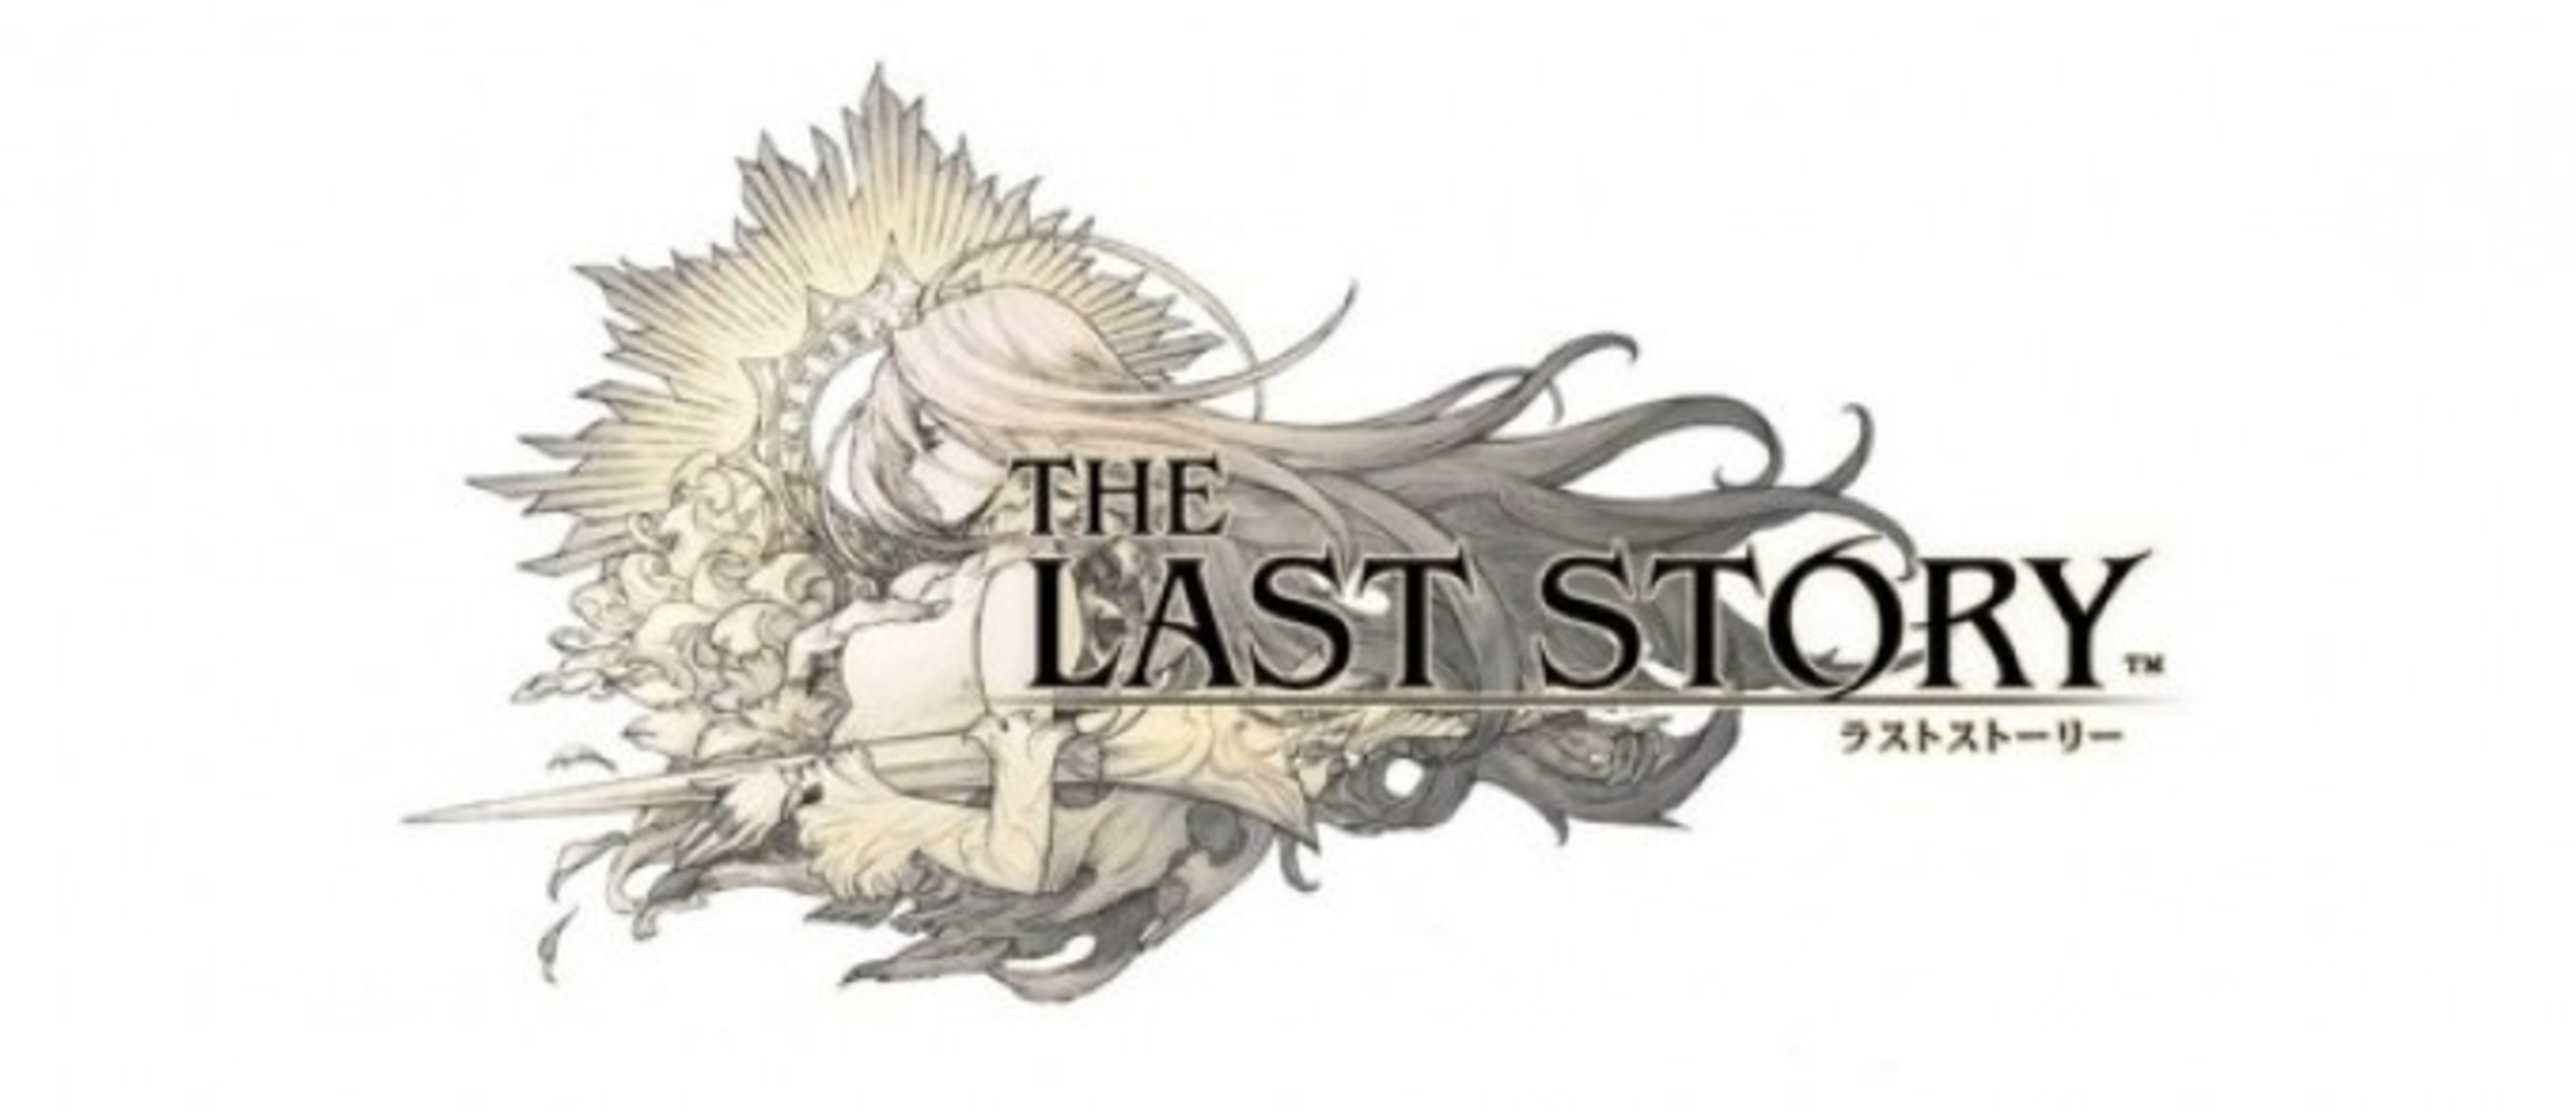 Pray game append last story. The last story. The last story Wii. The last story characters. Last story магазин.